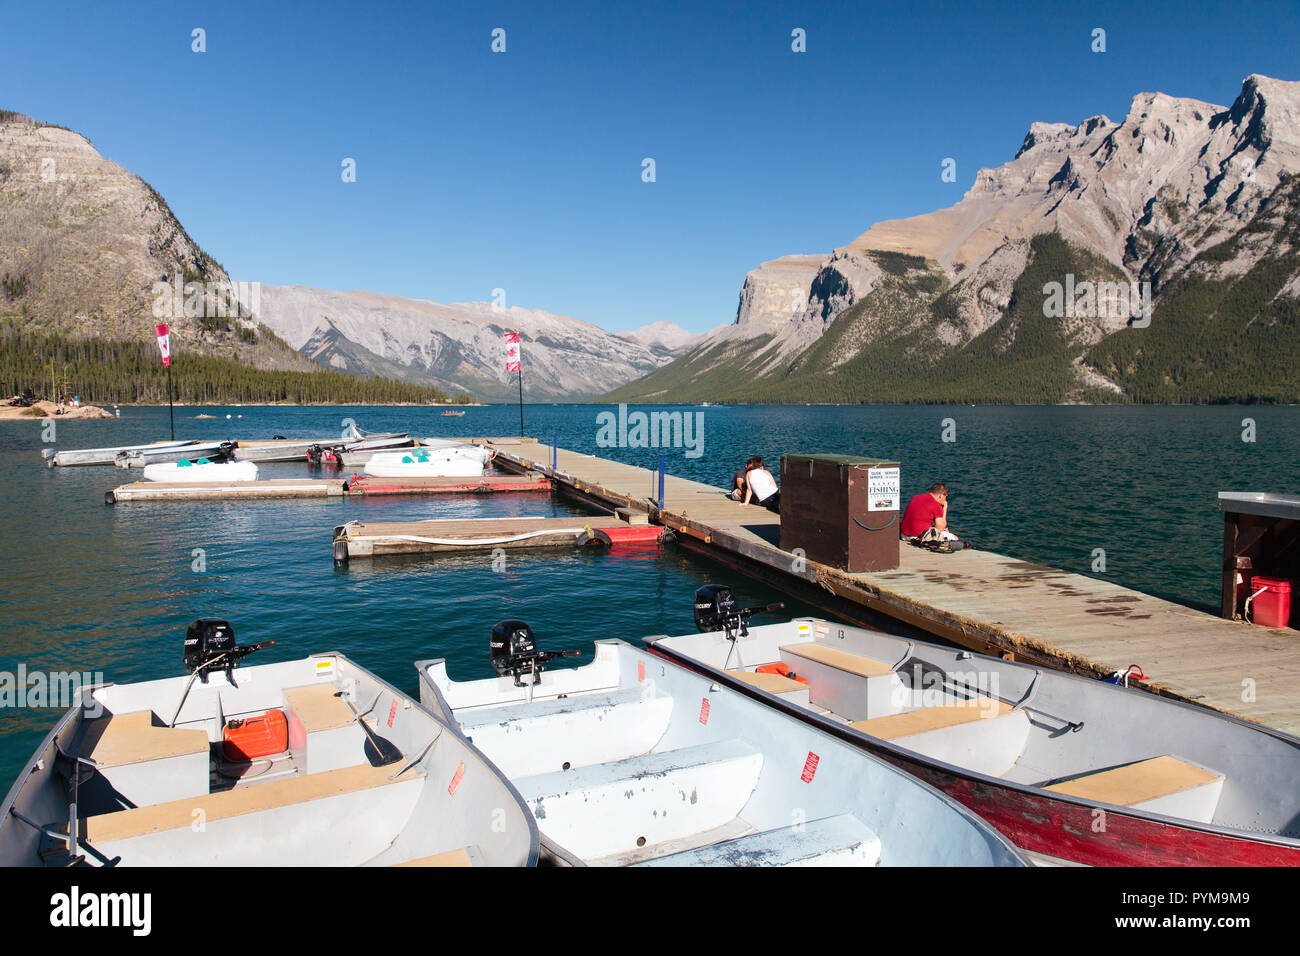 Boats on Lake Minnewanka in the Canadian Rocky Mountains, Alberta, Canada Stock Photo